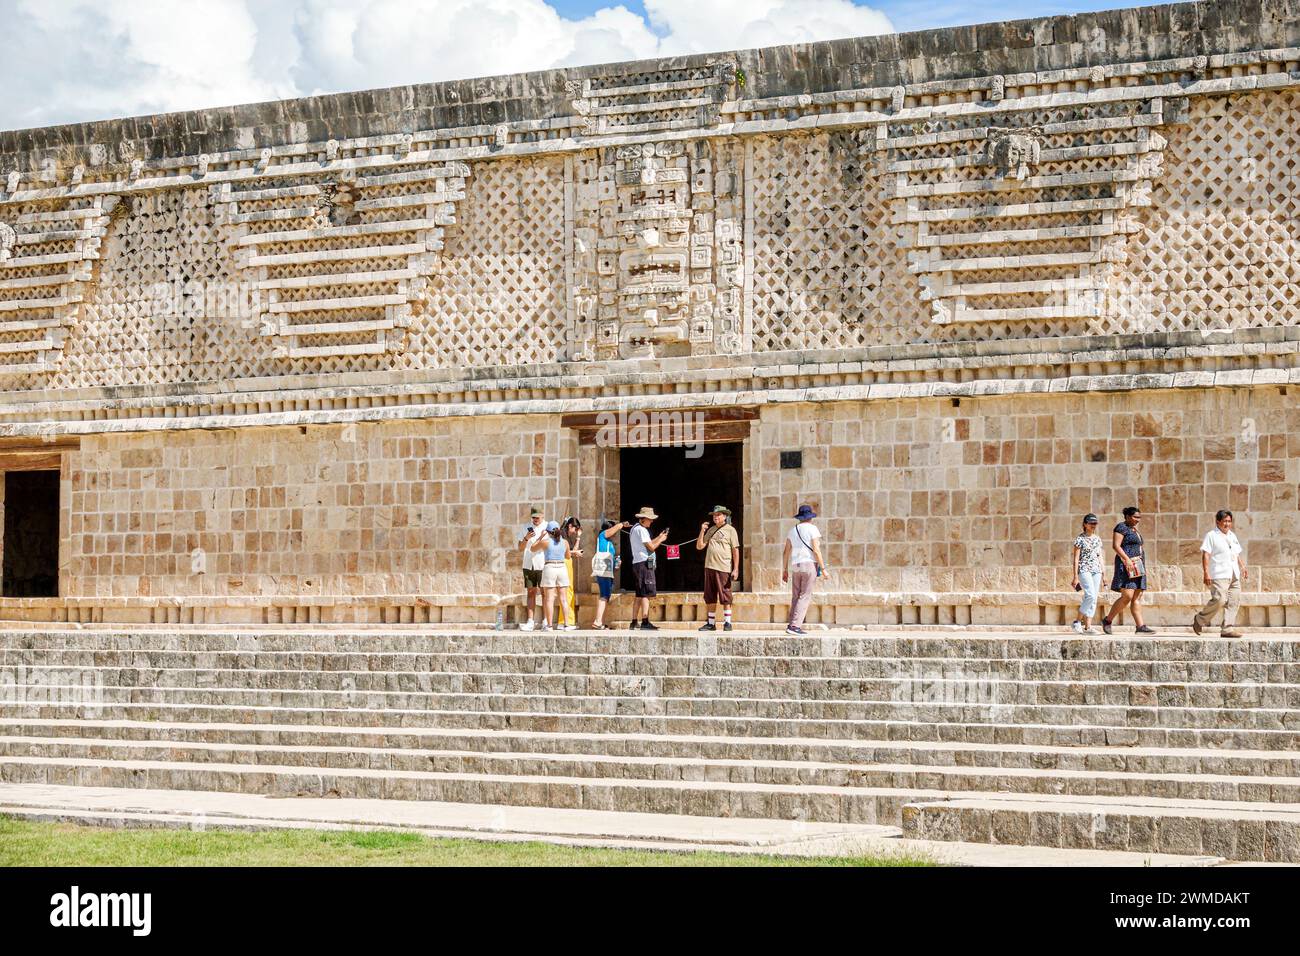 Merida Mexico,Puuc style Uxmal Archaeological Zone Site,Zona Arqueologica de Uxmal,classic Mayan city limestone,visitors man men male,woman women lady Stock Photo